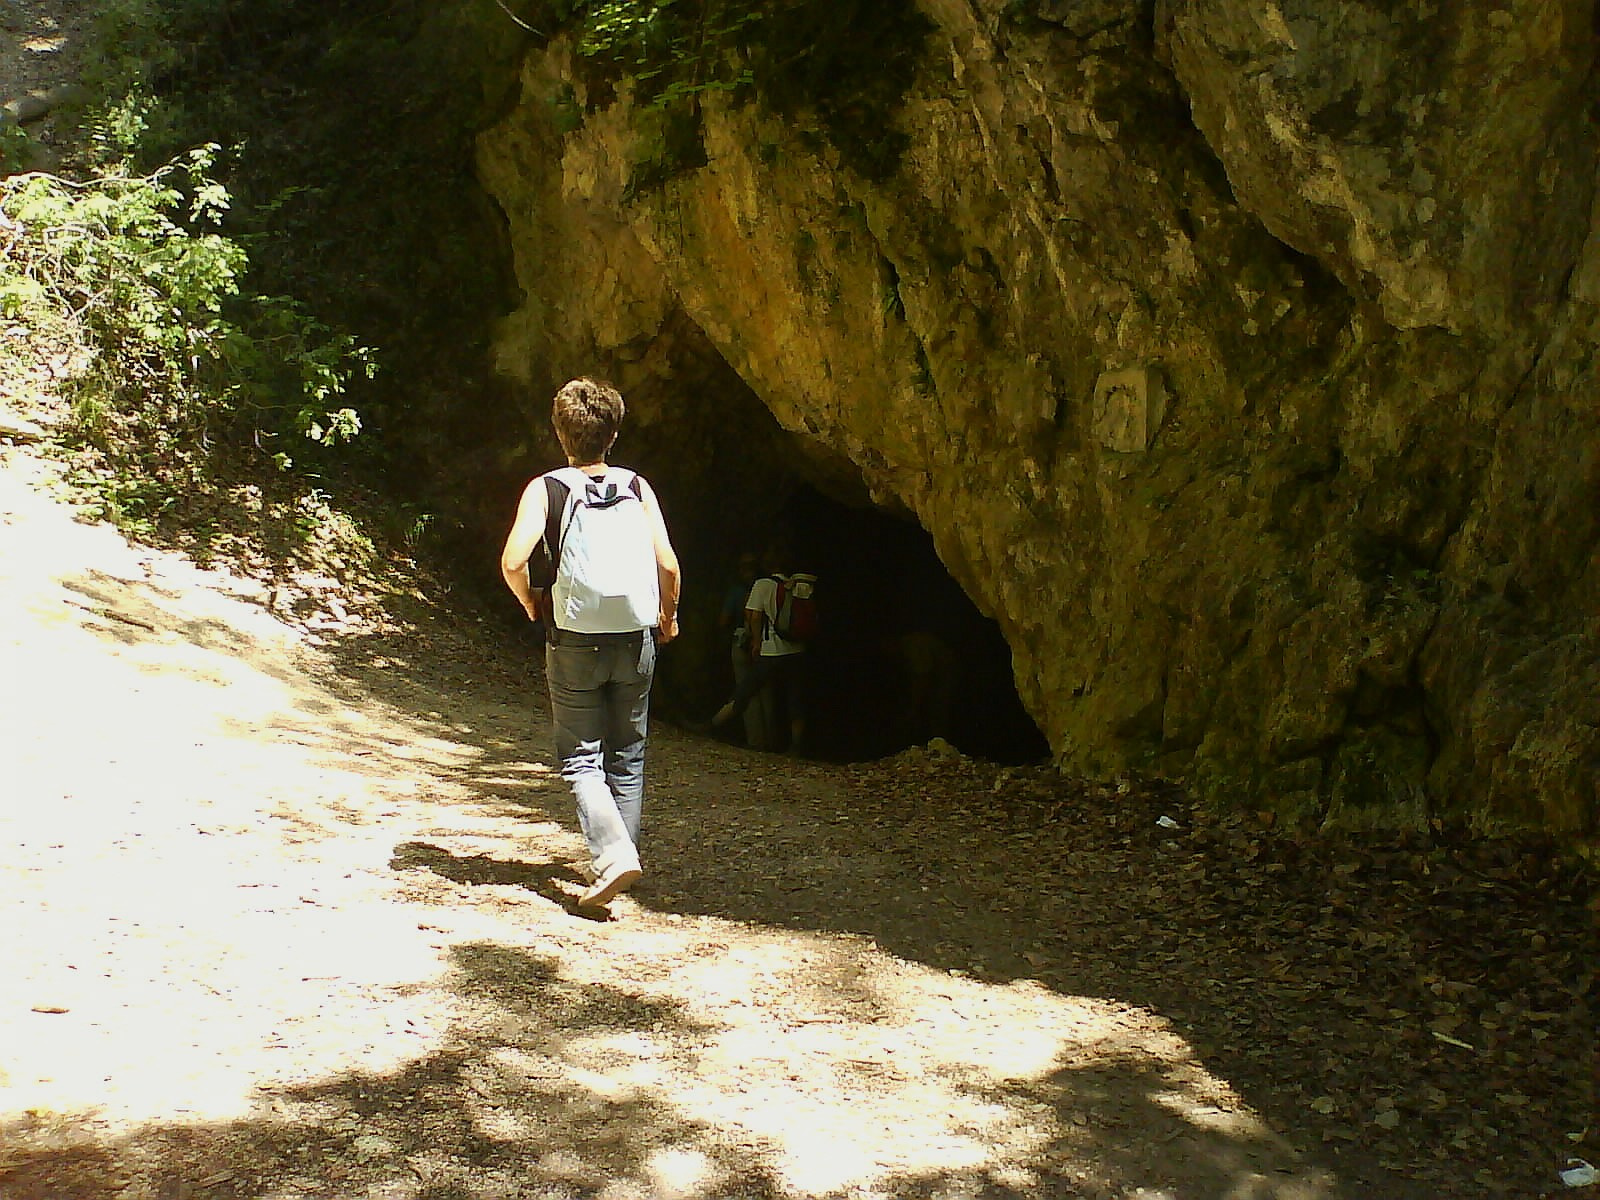 Odvaskői barlang